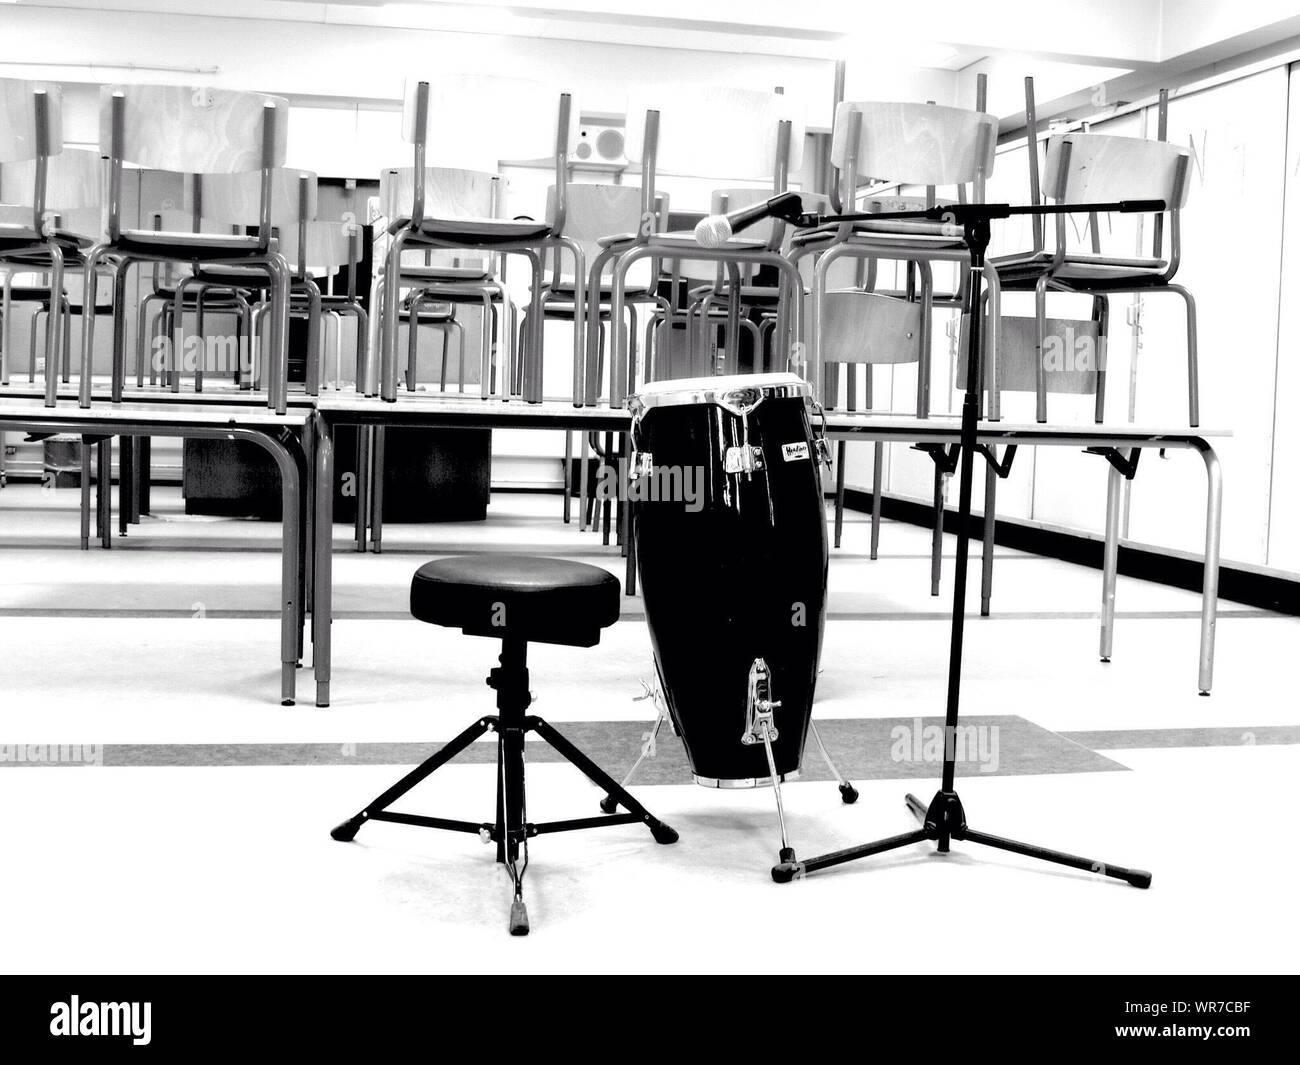 Conga und Mikrofon mit Hocker In leeren Klassenzimmer Stockfotografie -  Alamy